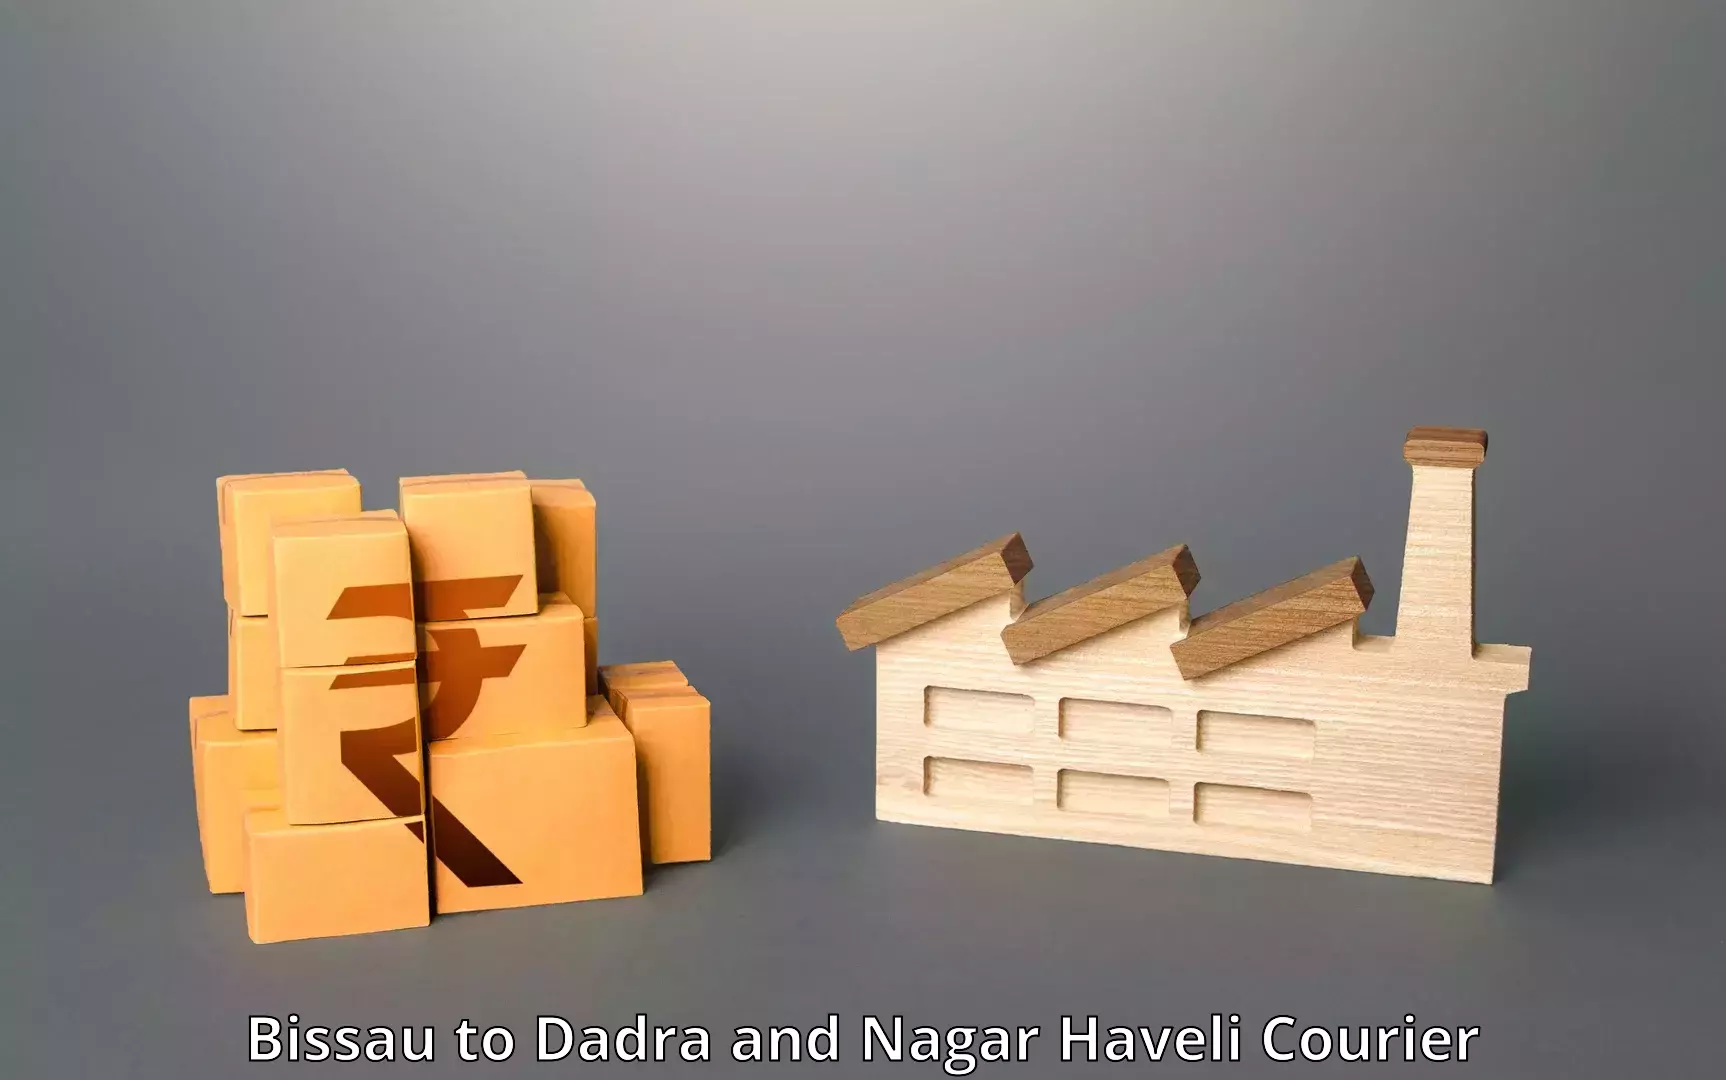 Courier service comparison Bissau to Dadra and Nagar Haveli